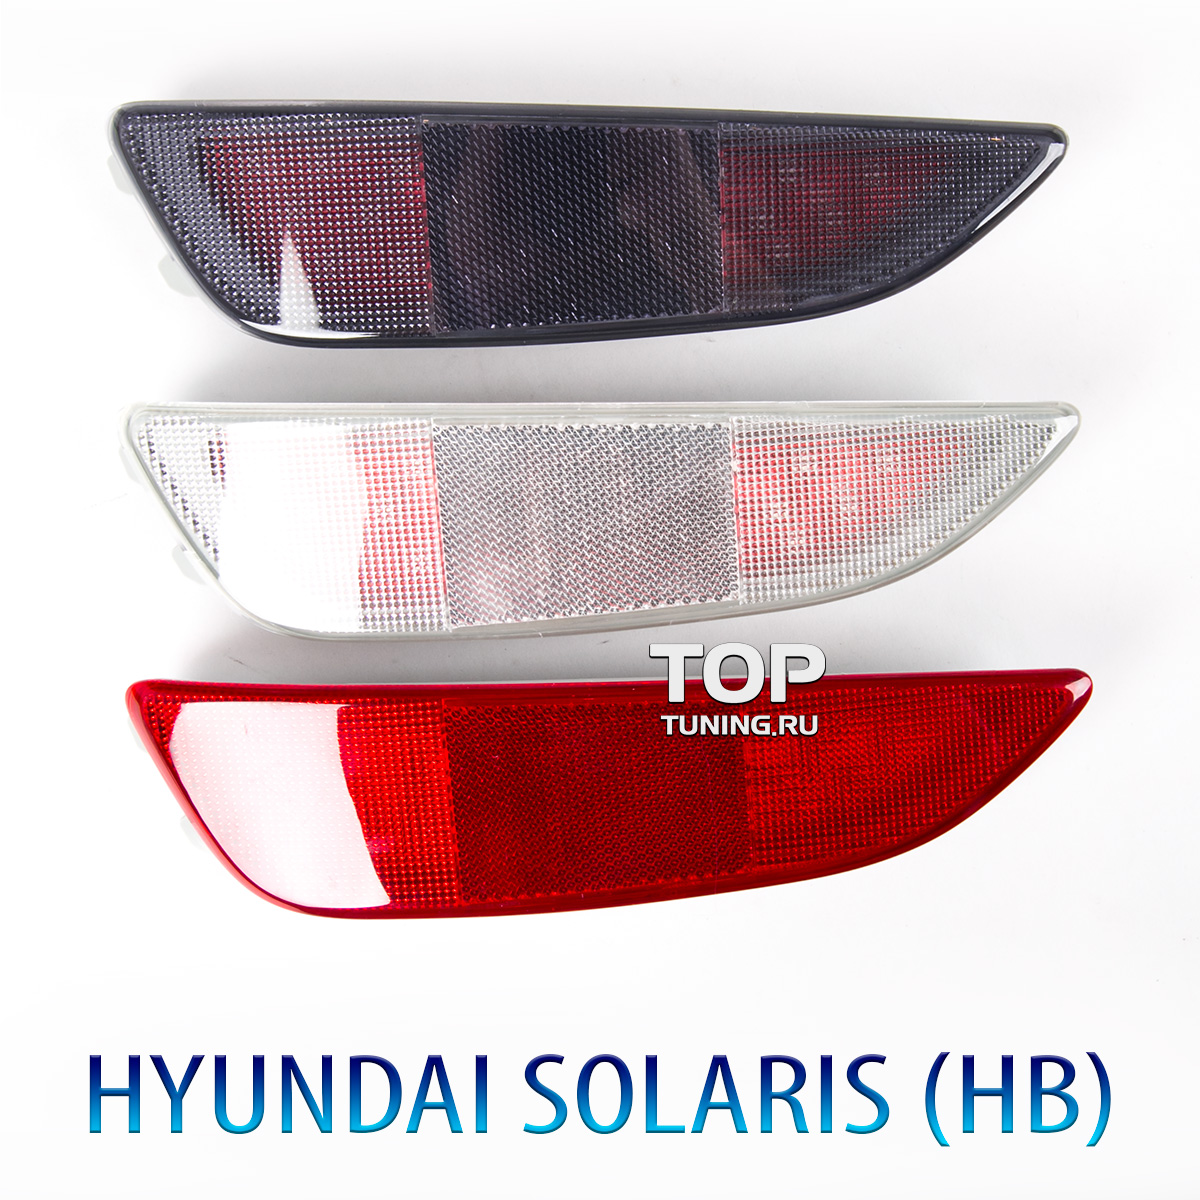 Решетка радиатора с лезвиями Dynamic на Hyundai Solaris